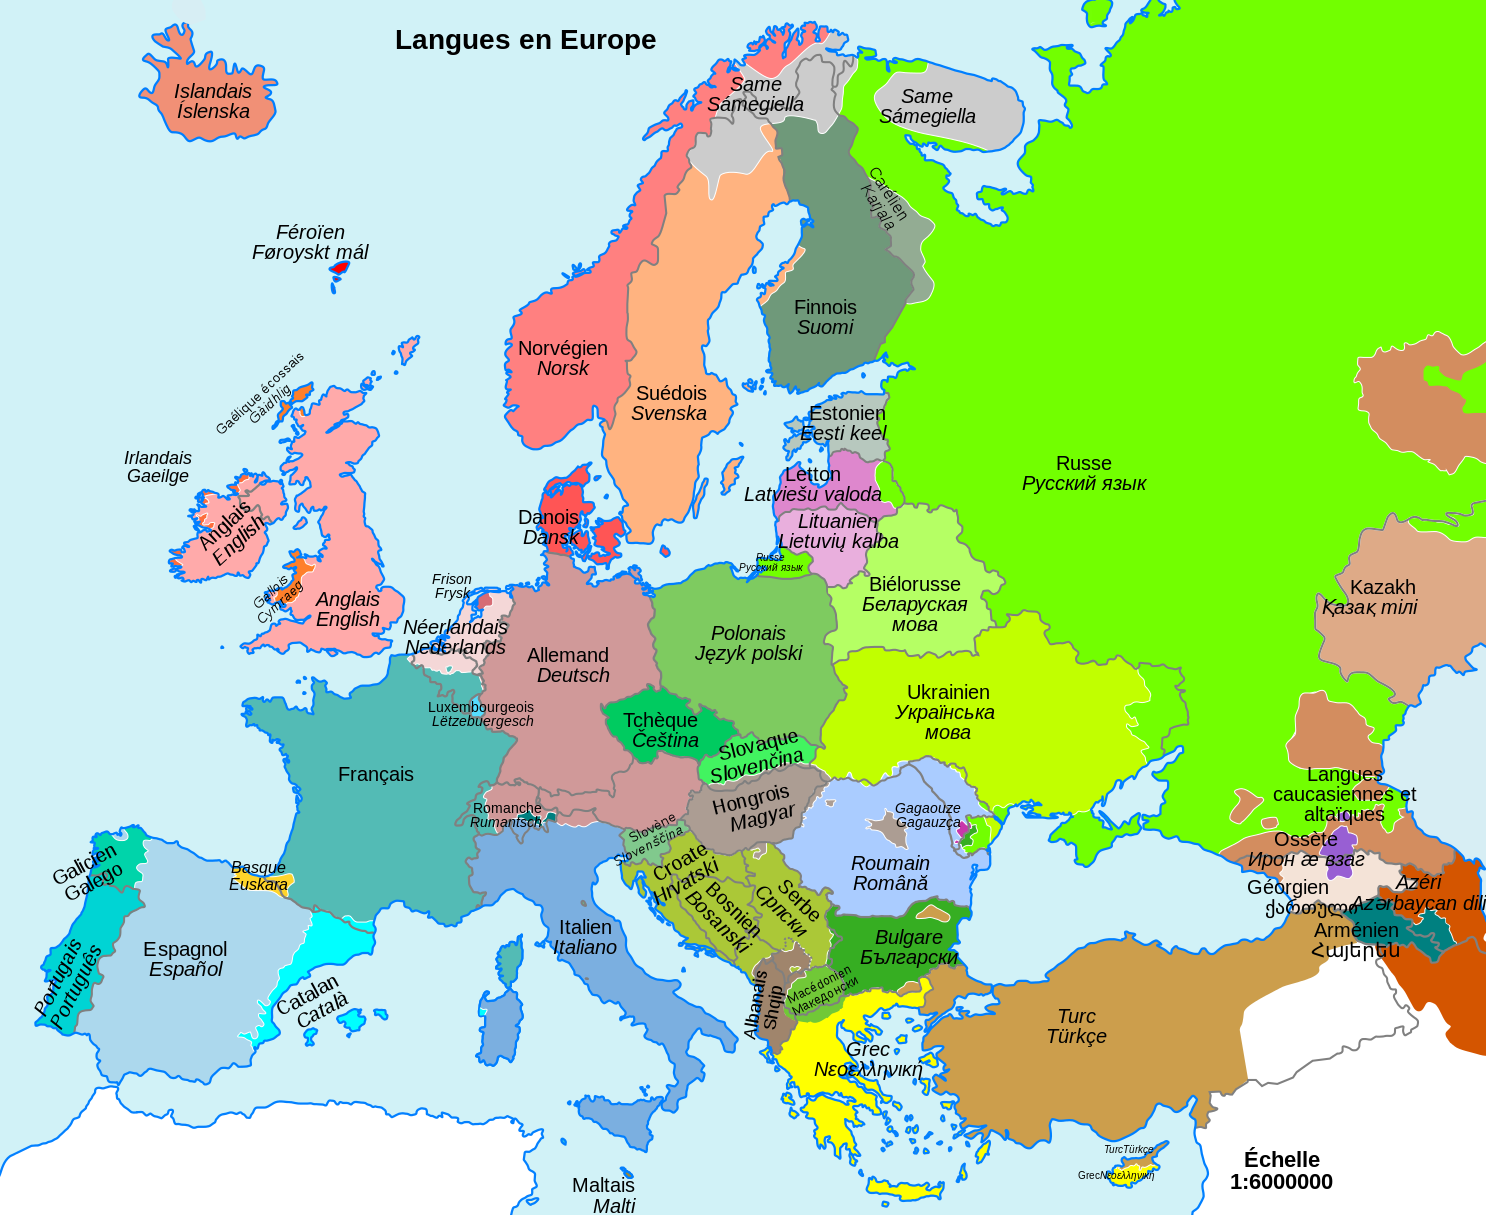 carte europe à imprimer